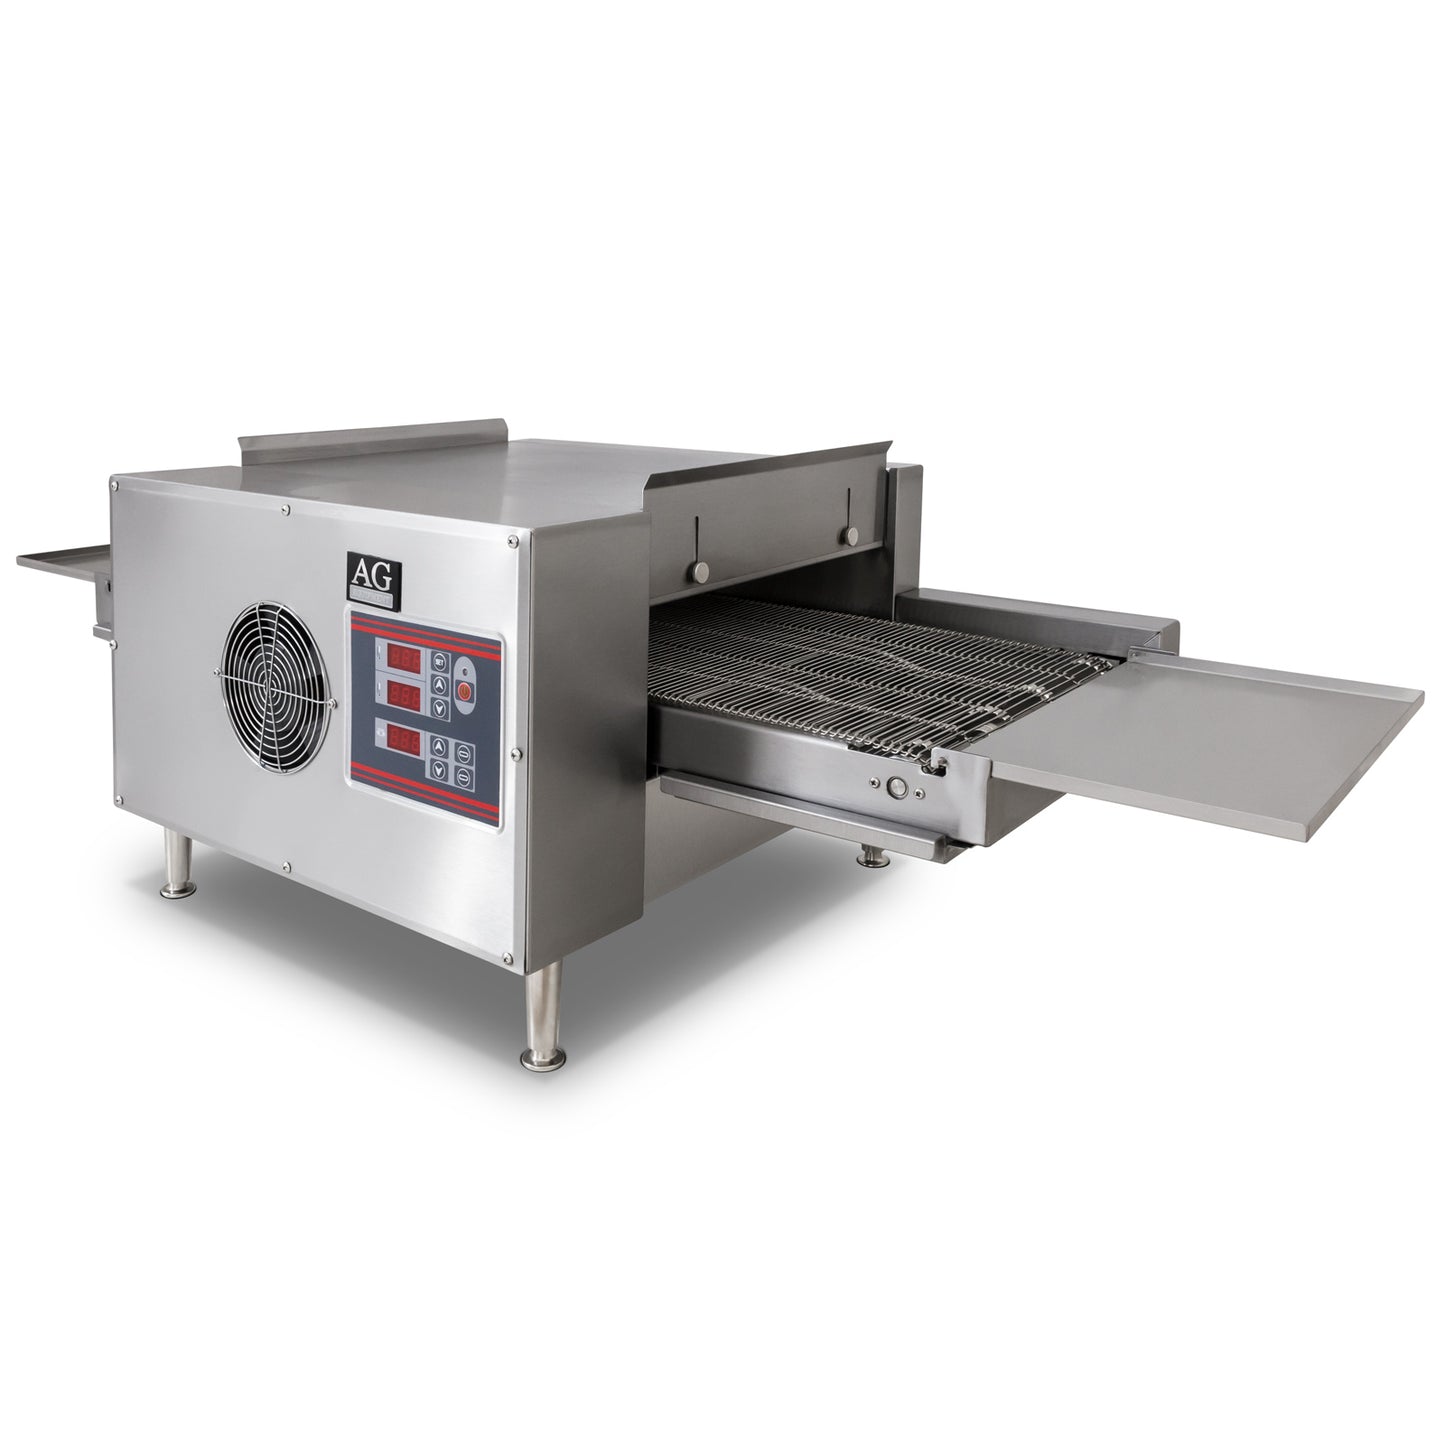 HX-1S Commercial Conveyor / Pizza Oven